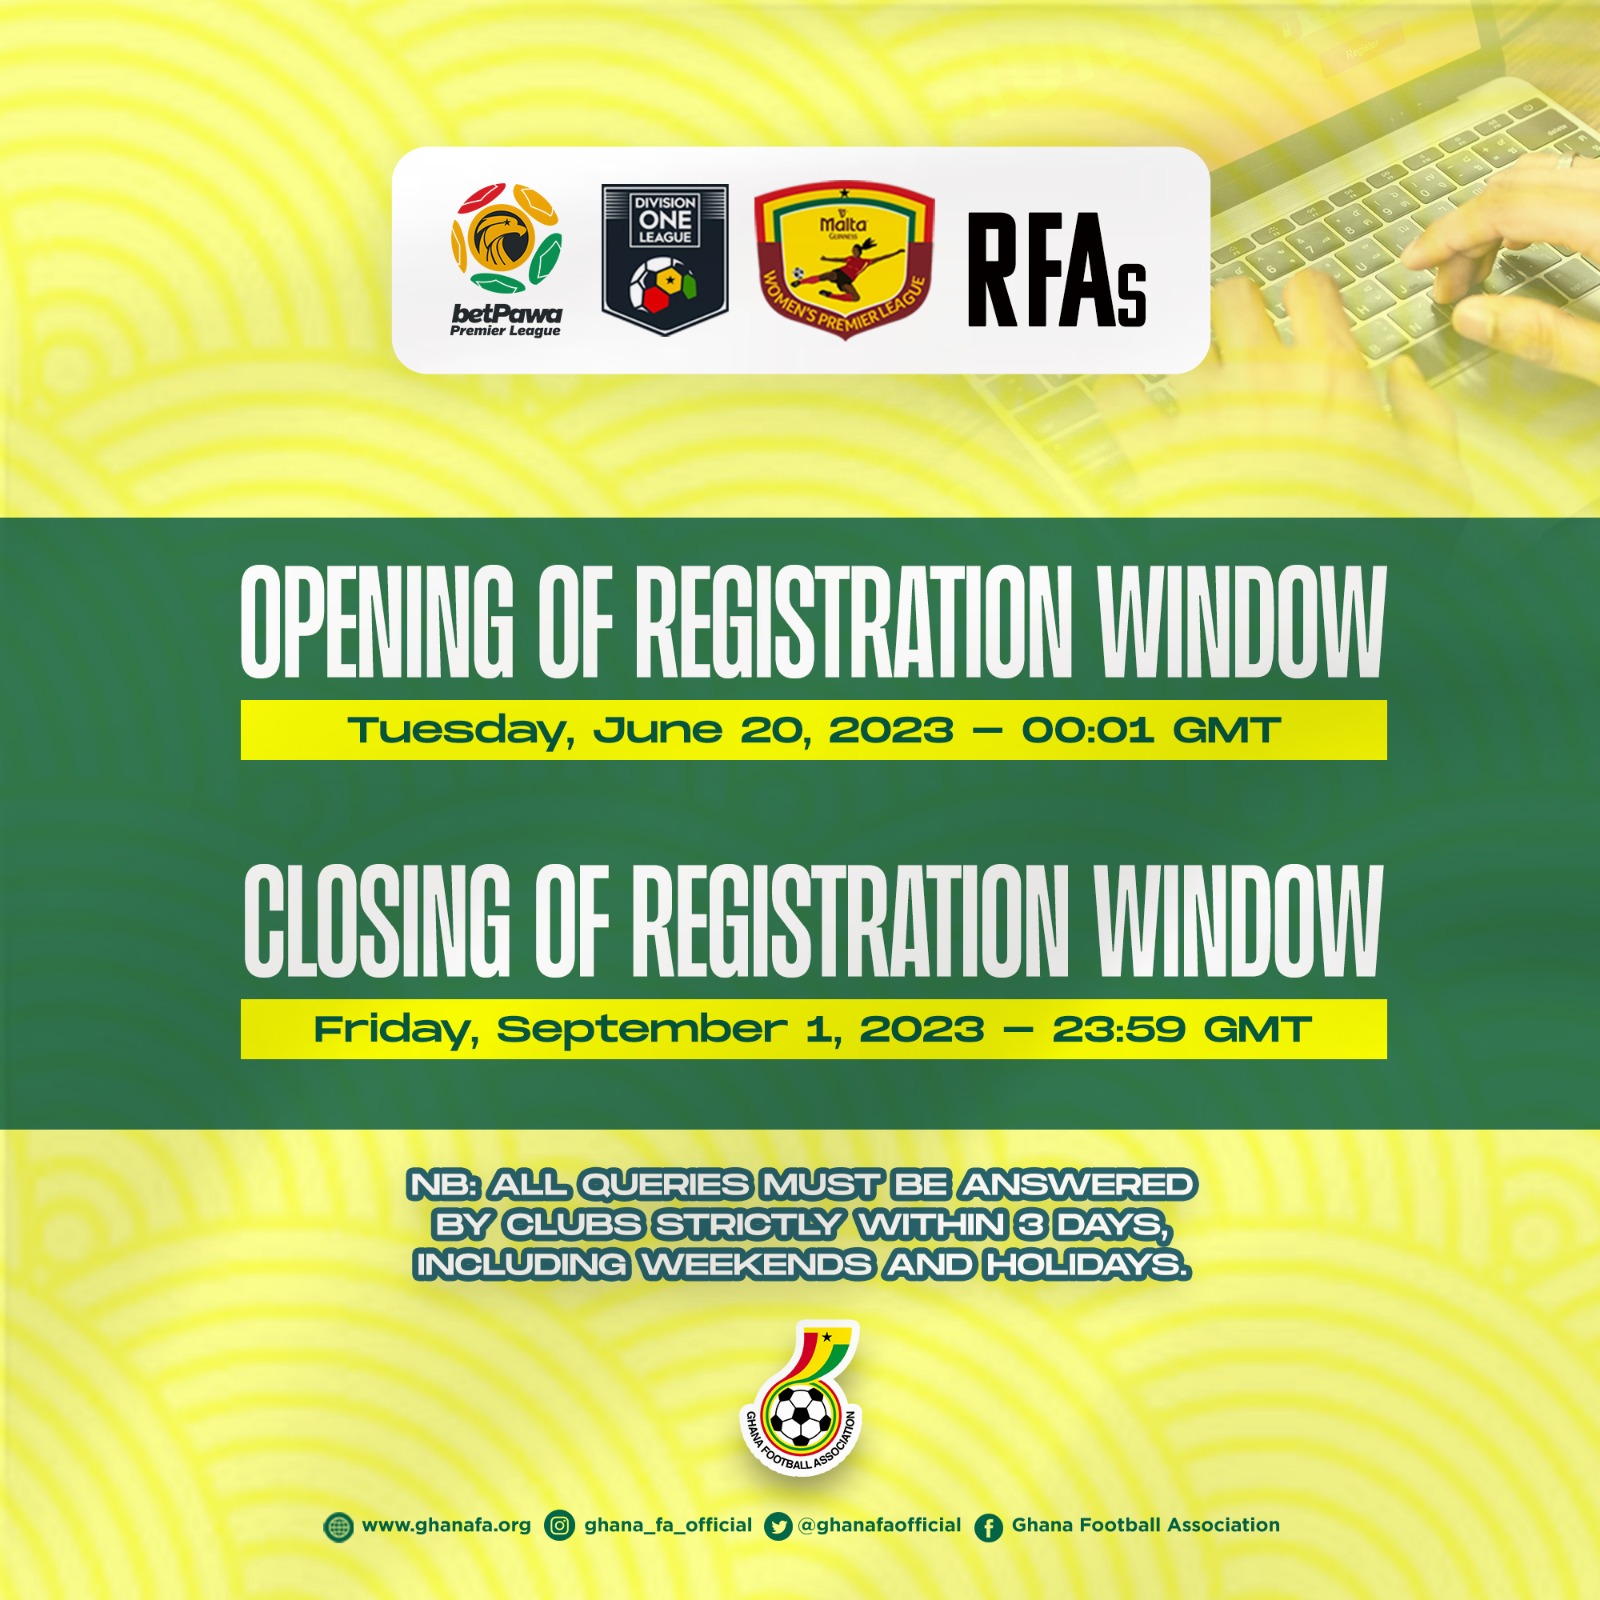 Registration window for 2023/24 football season opens on Tuesday, June 20, 2023